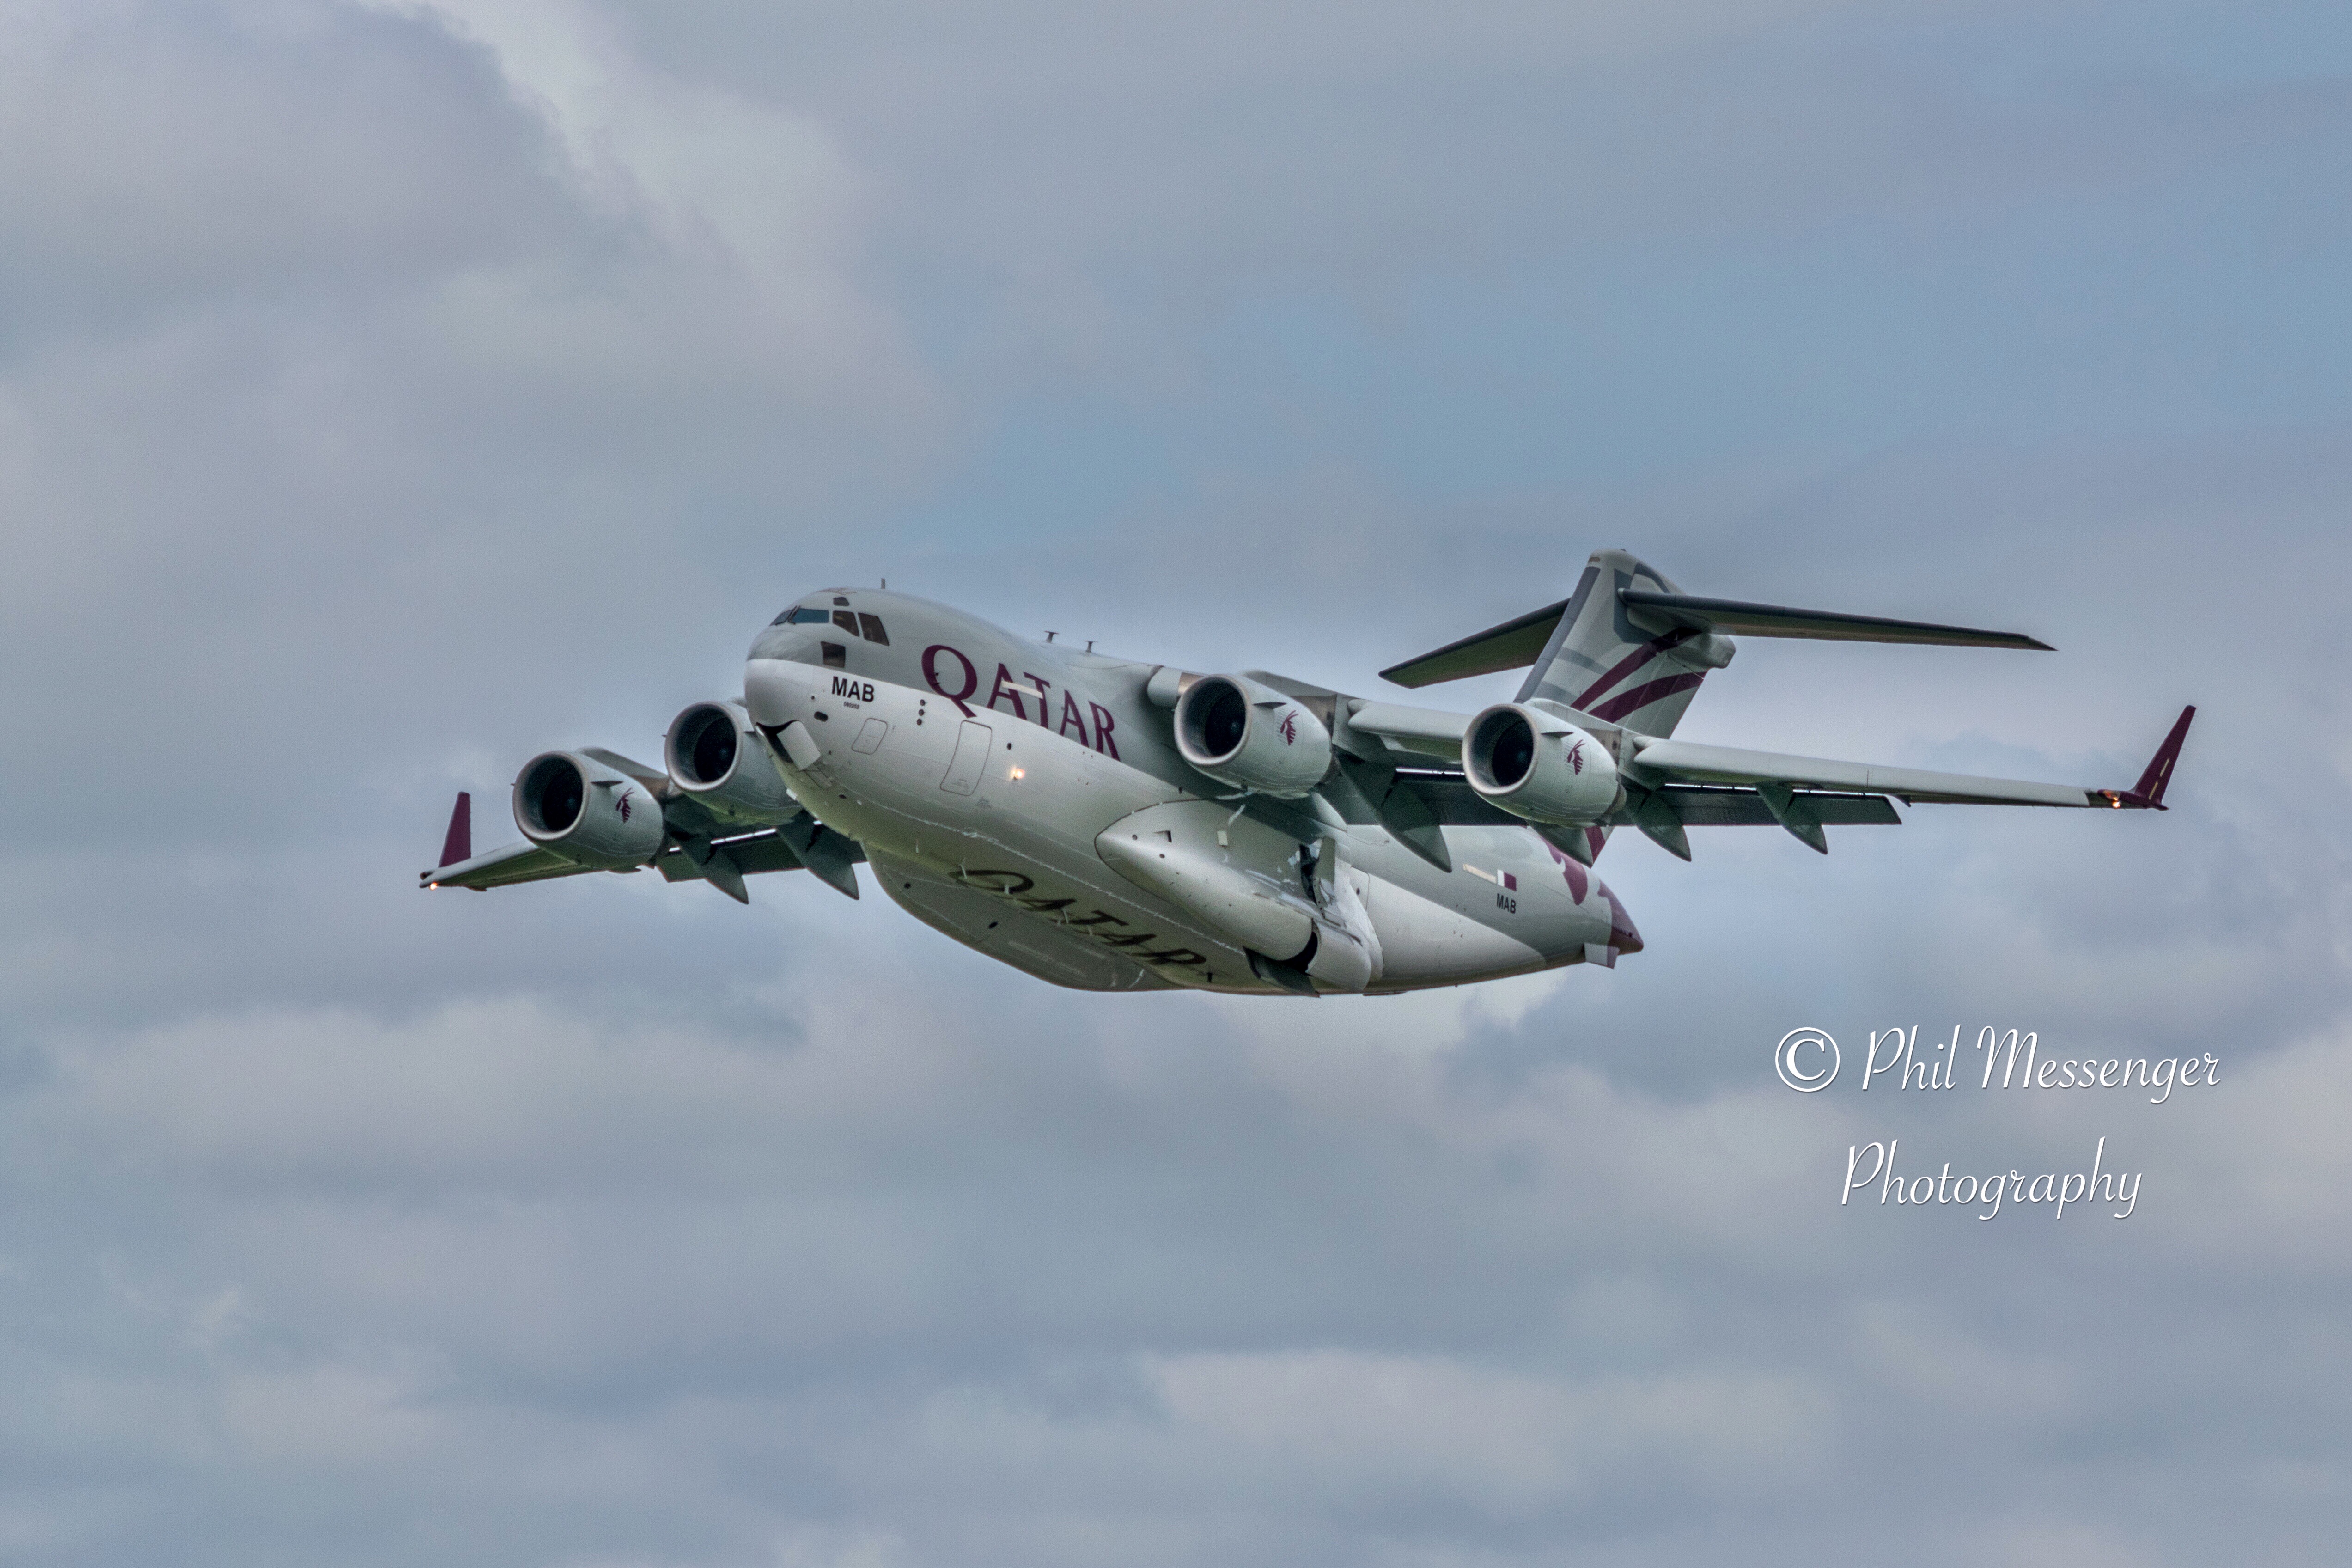 Qatar C-17 Globemaster III departing the Royal International Air Tattoo 2019